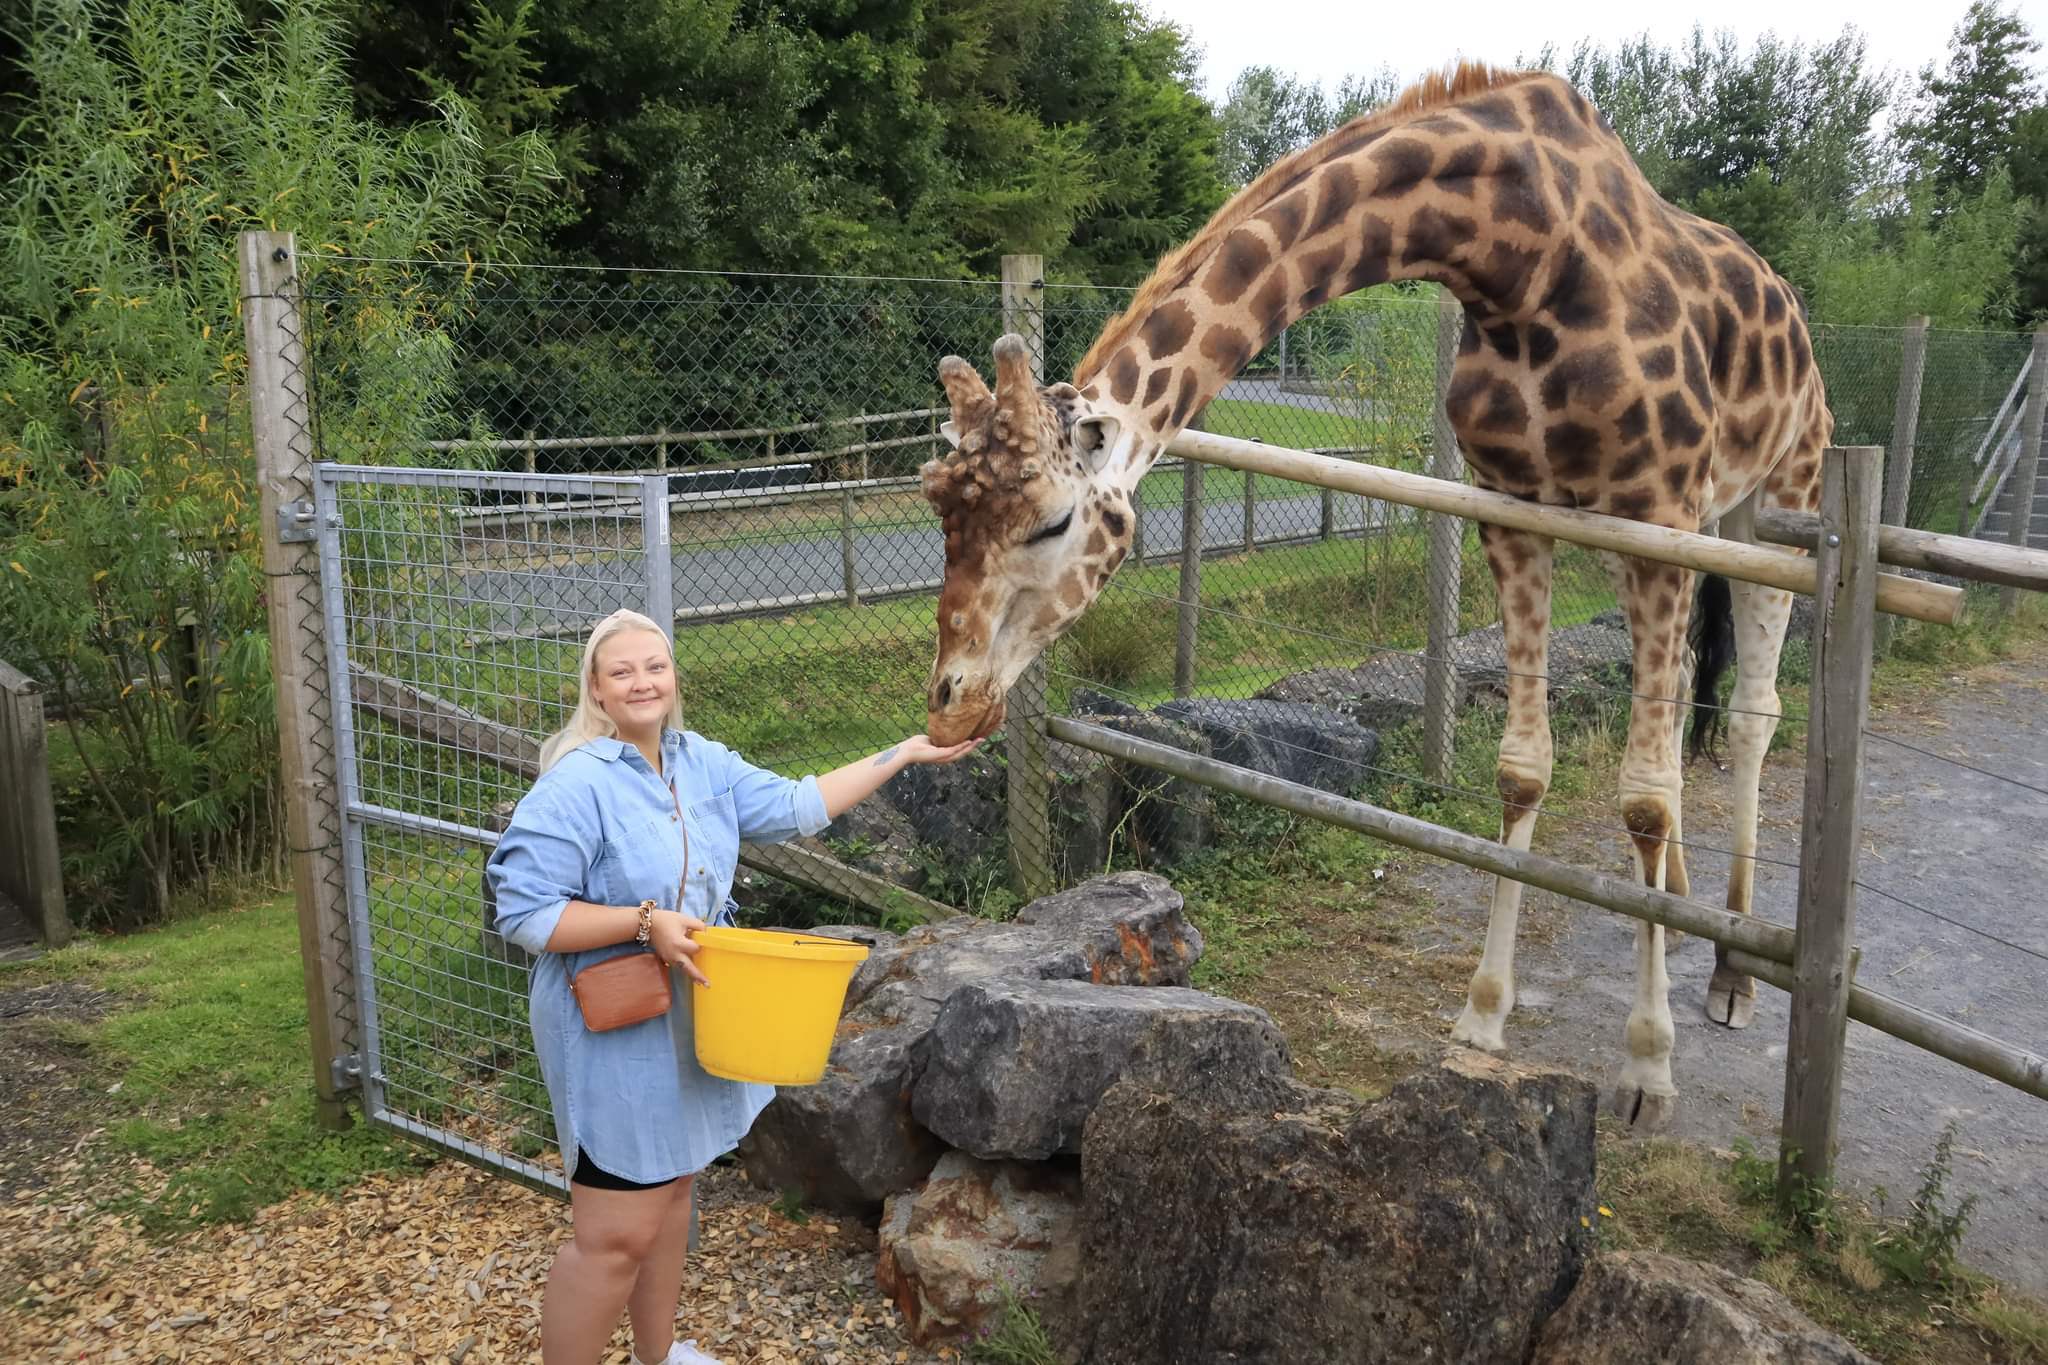 Giraffe Experience UK • Feed Giraffes at Folly Farm